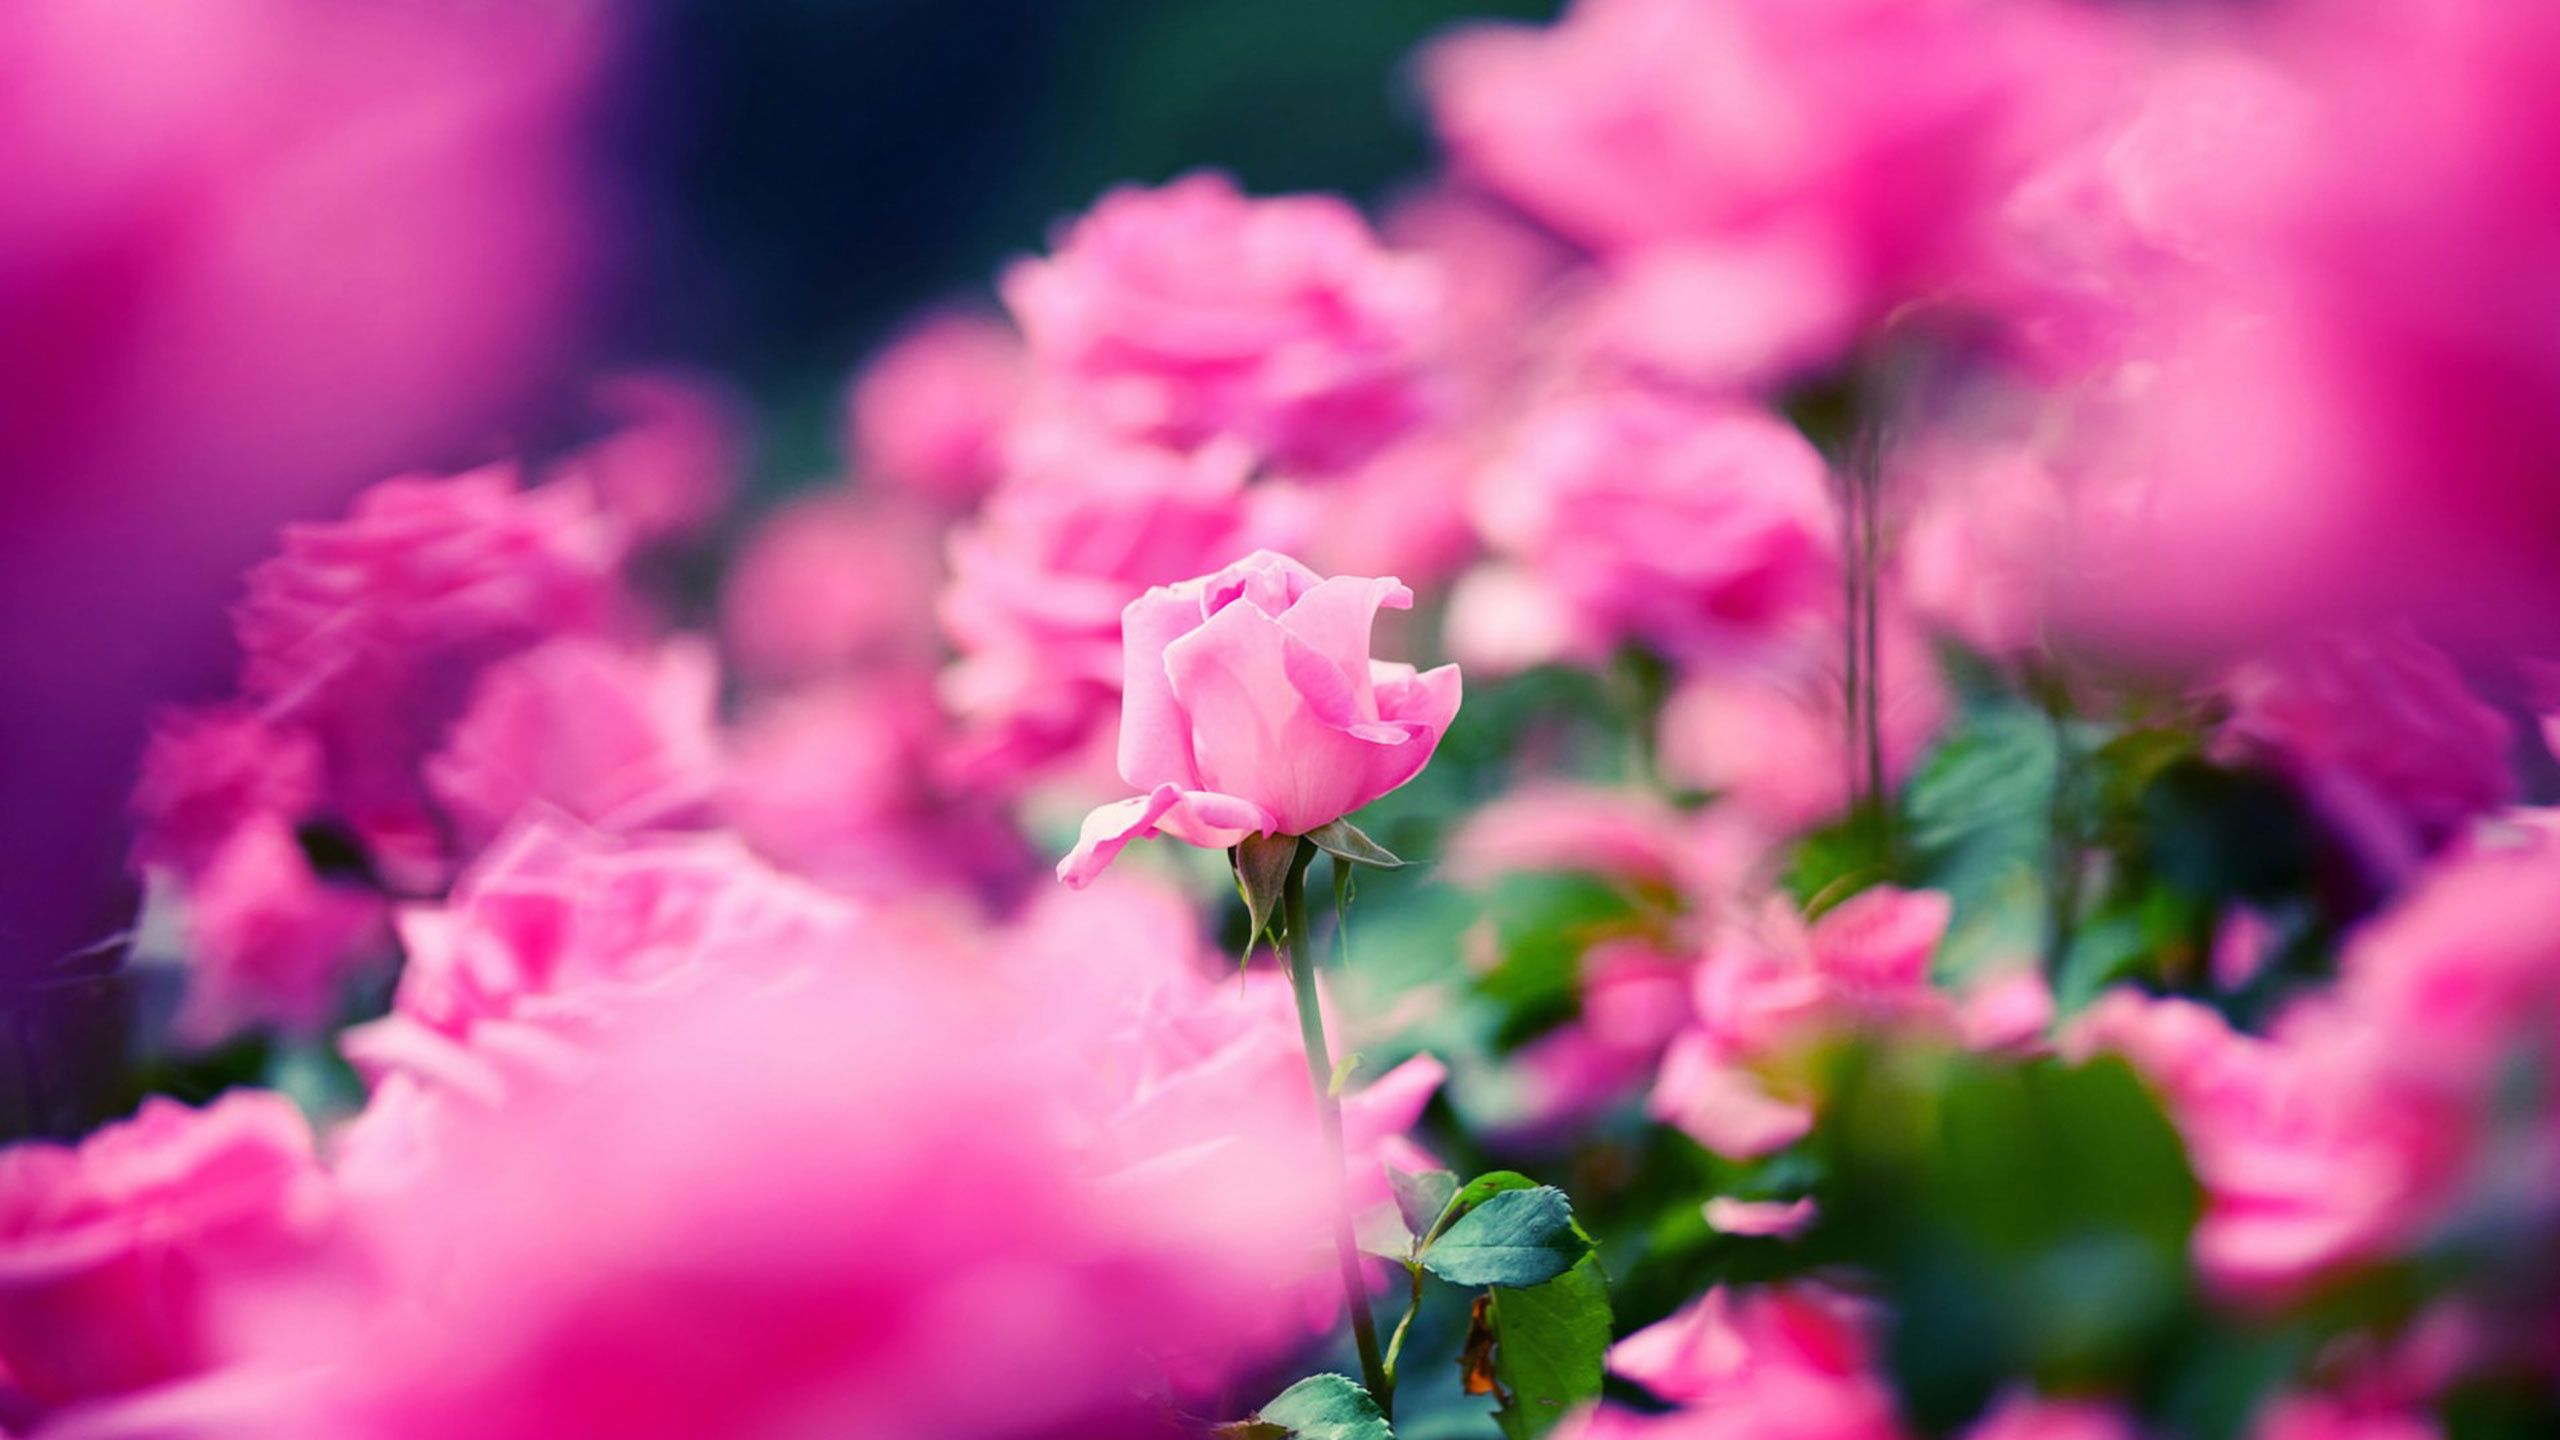 Pink Roses in Tilt Shift Lens. Wallpaper in 2560x1440 Resolution